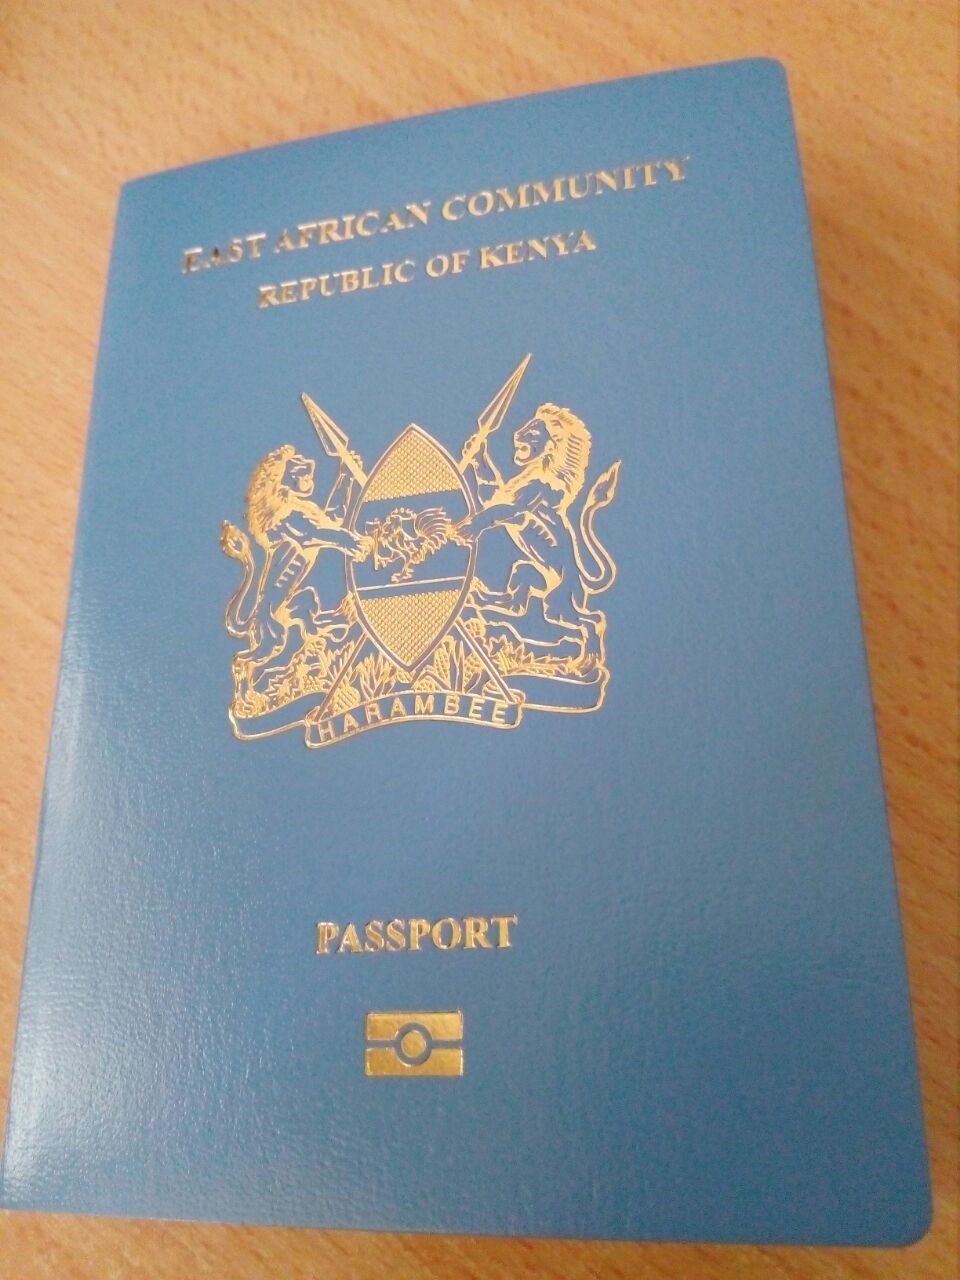 Passport Application Suspended Until Further Notice ...